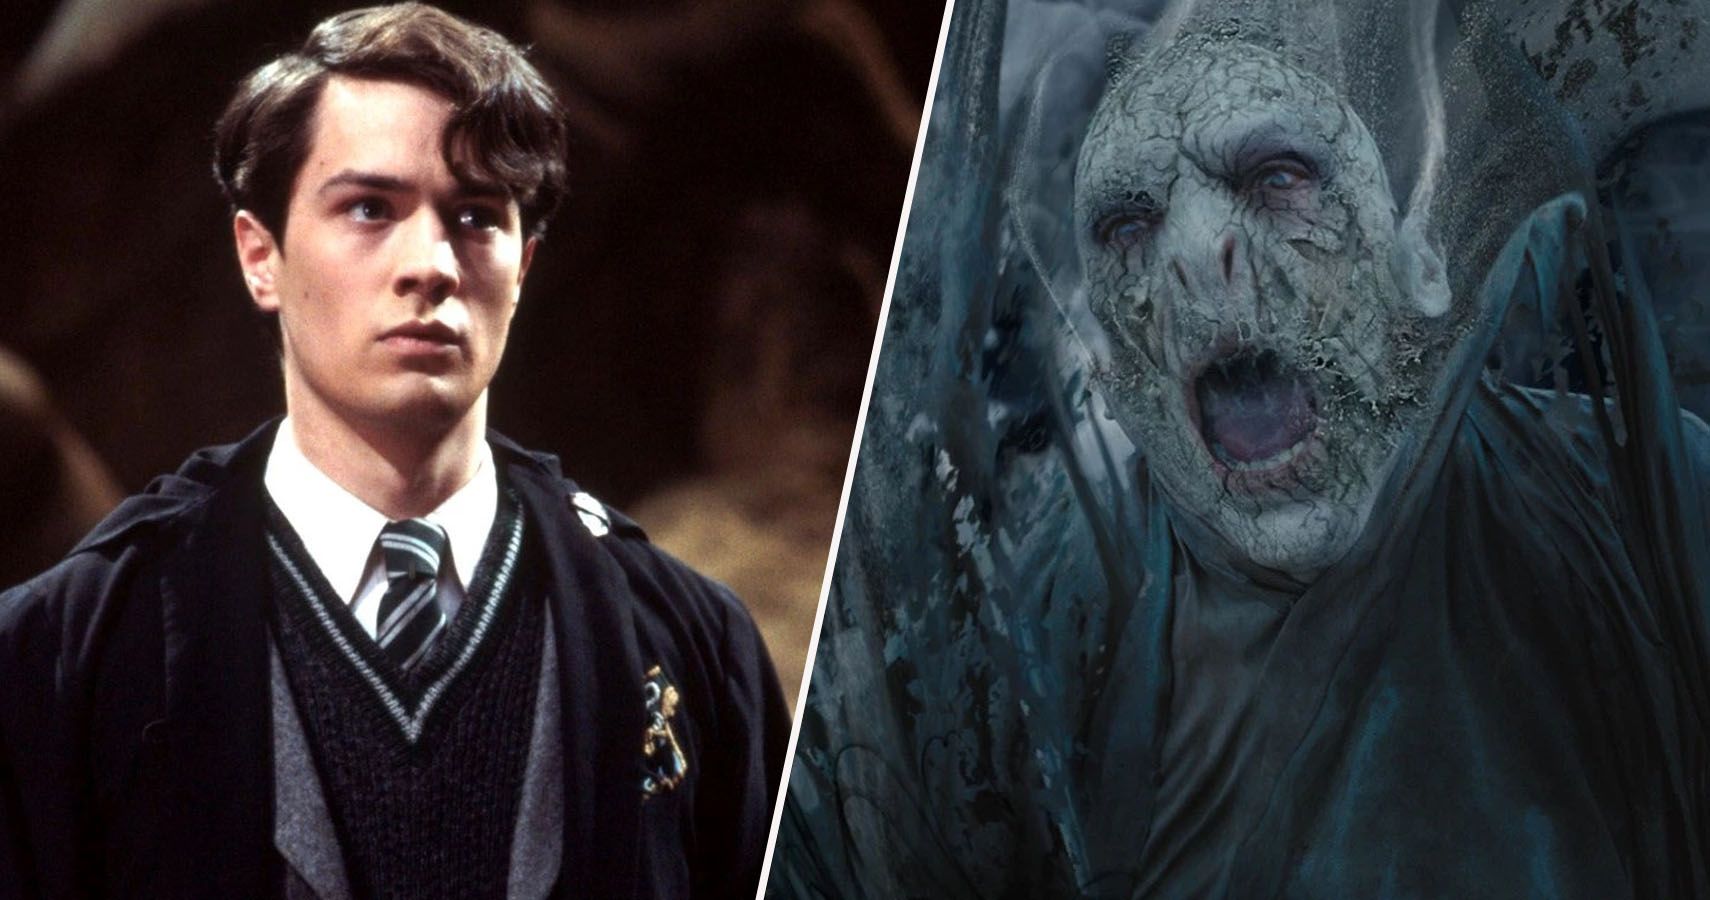 Acteur De Voldemort Dans Harry Potter 15 Voldemort Facts The Harry Potter Films Didn't Share (Good And Bad)